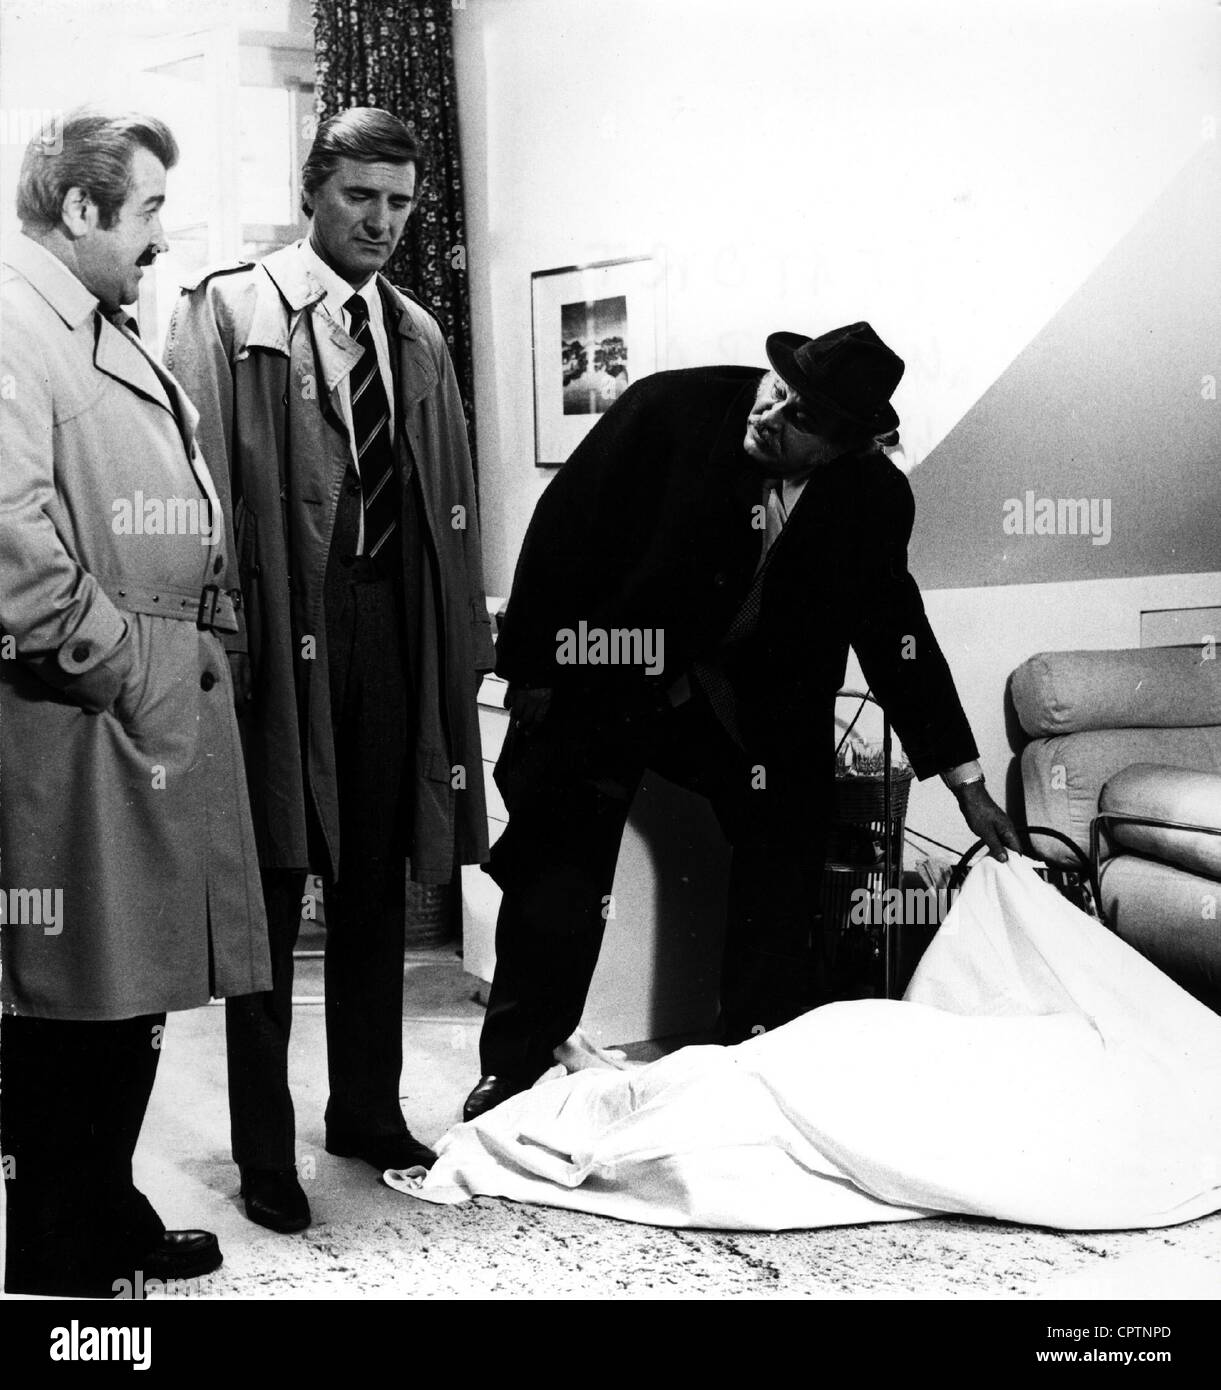 Fischer, Helmut, 15.11.1926 - 14.6.1997, German actor, full length, in the German crime drama series 'Tatort' (Crime Scene), with Willy Harlander, Gustl Bayrhammer, 1981, Stock Photo